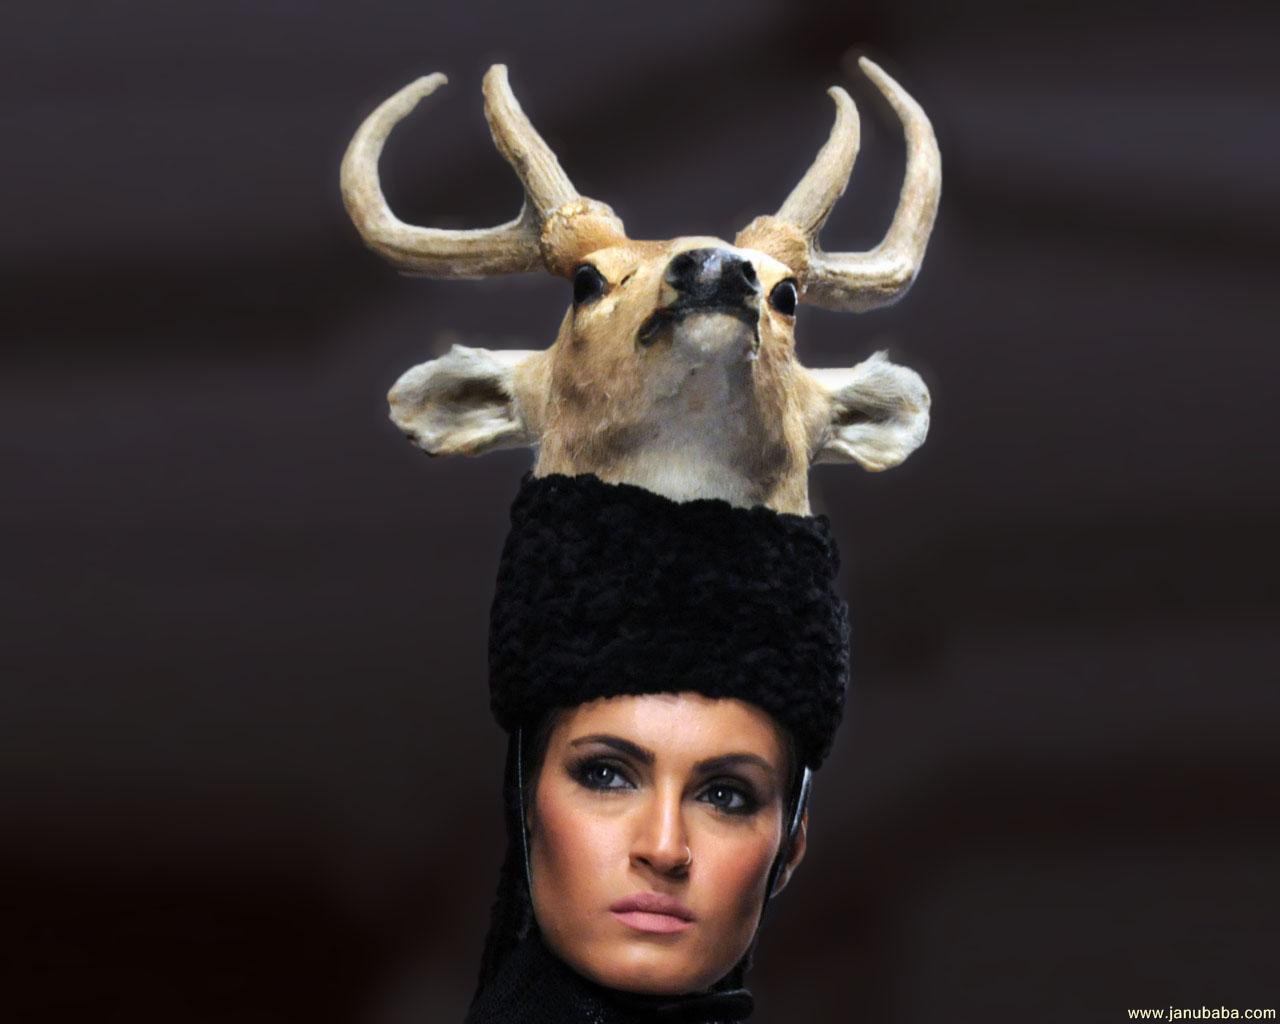 http://www.janubaba.com/Wallpapers/All_Categories/Models/Nadia_Hussain11_lboob.jpg